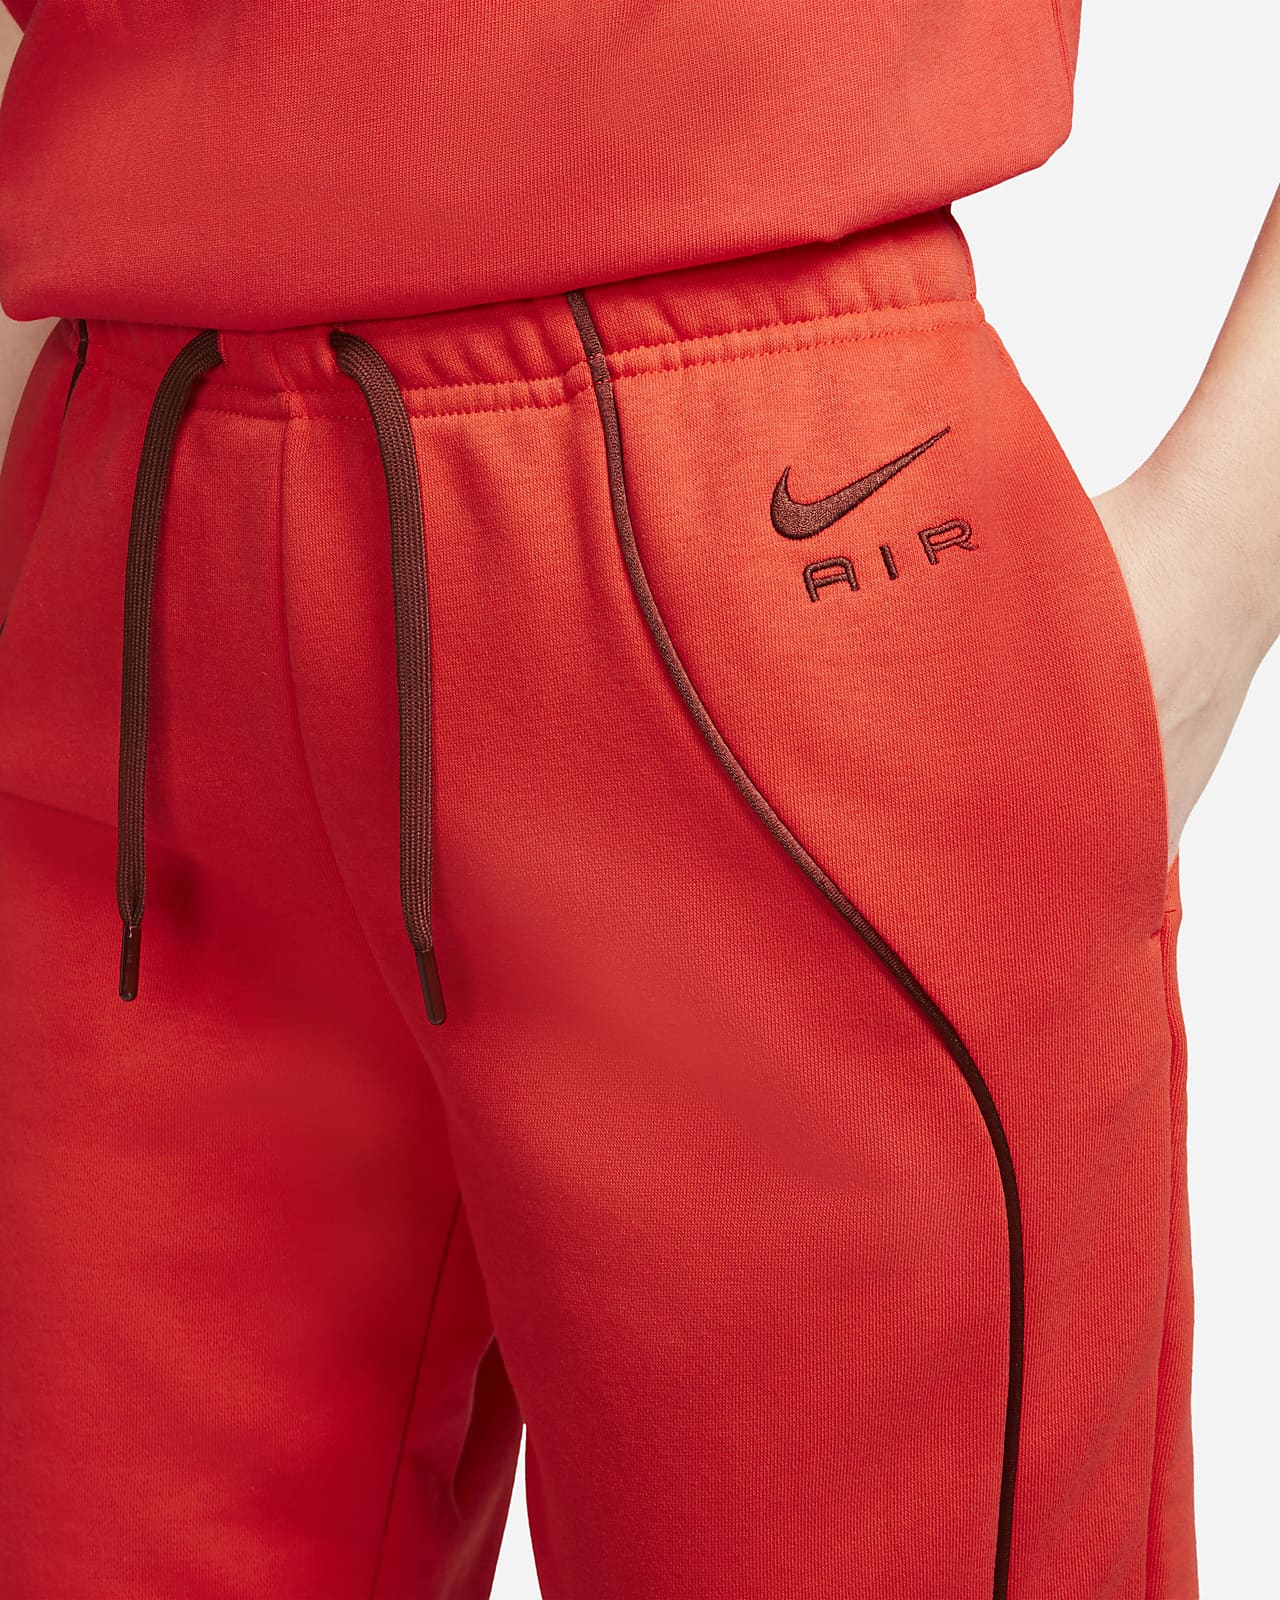 Nike Air corduroy fleece joggers in brown